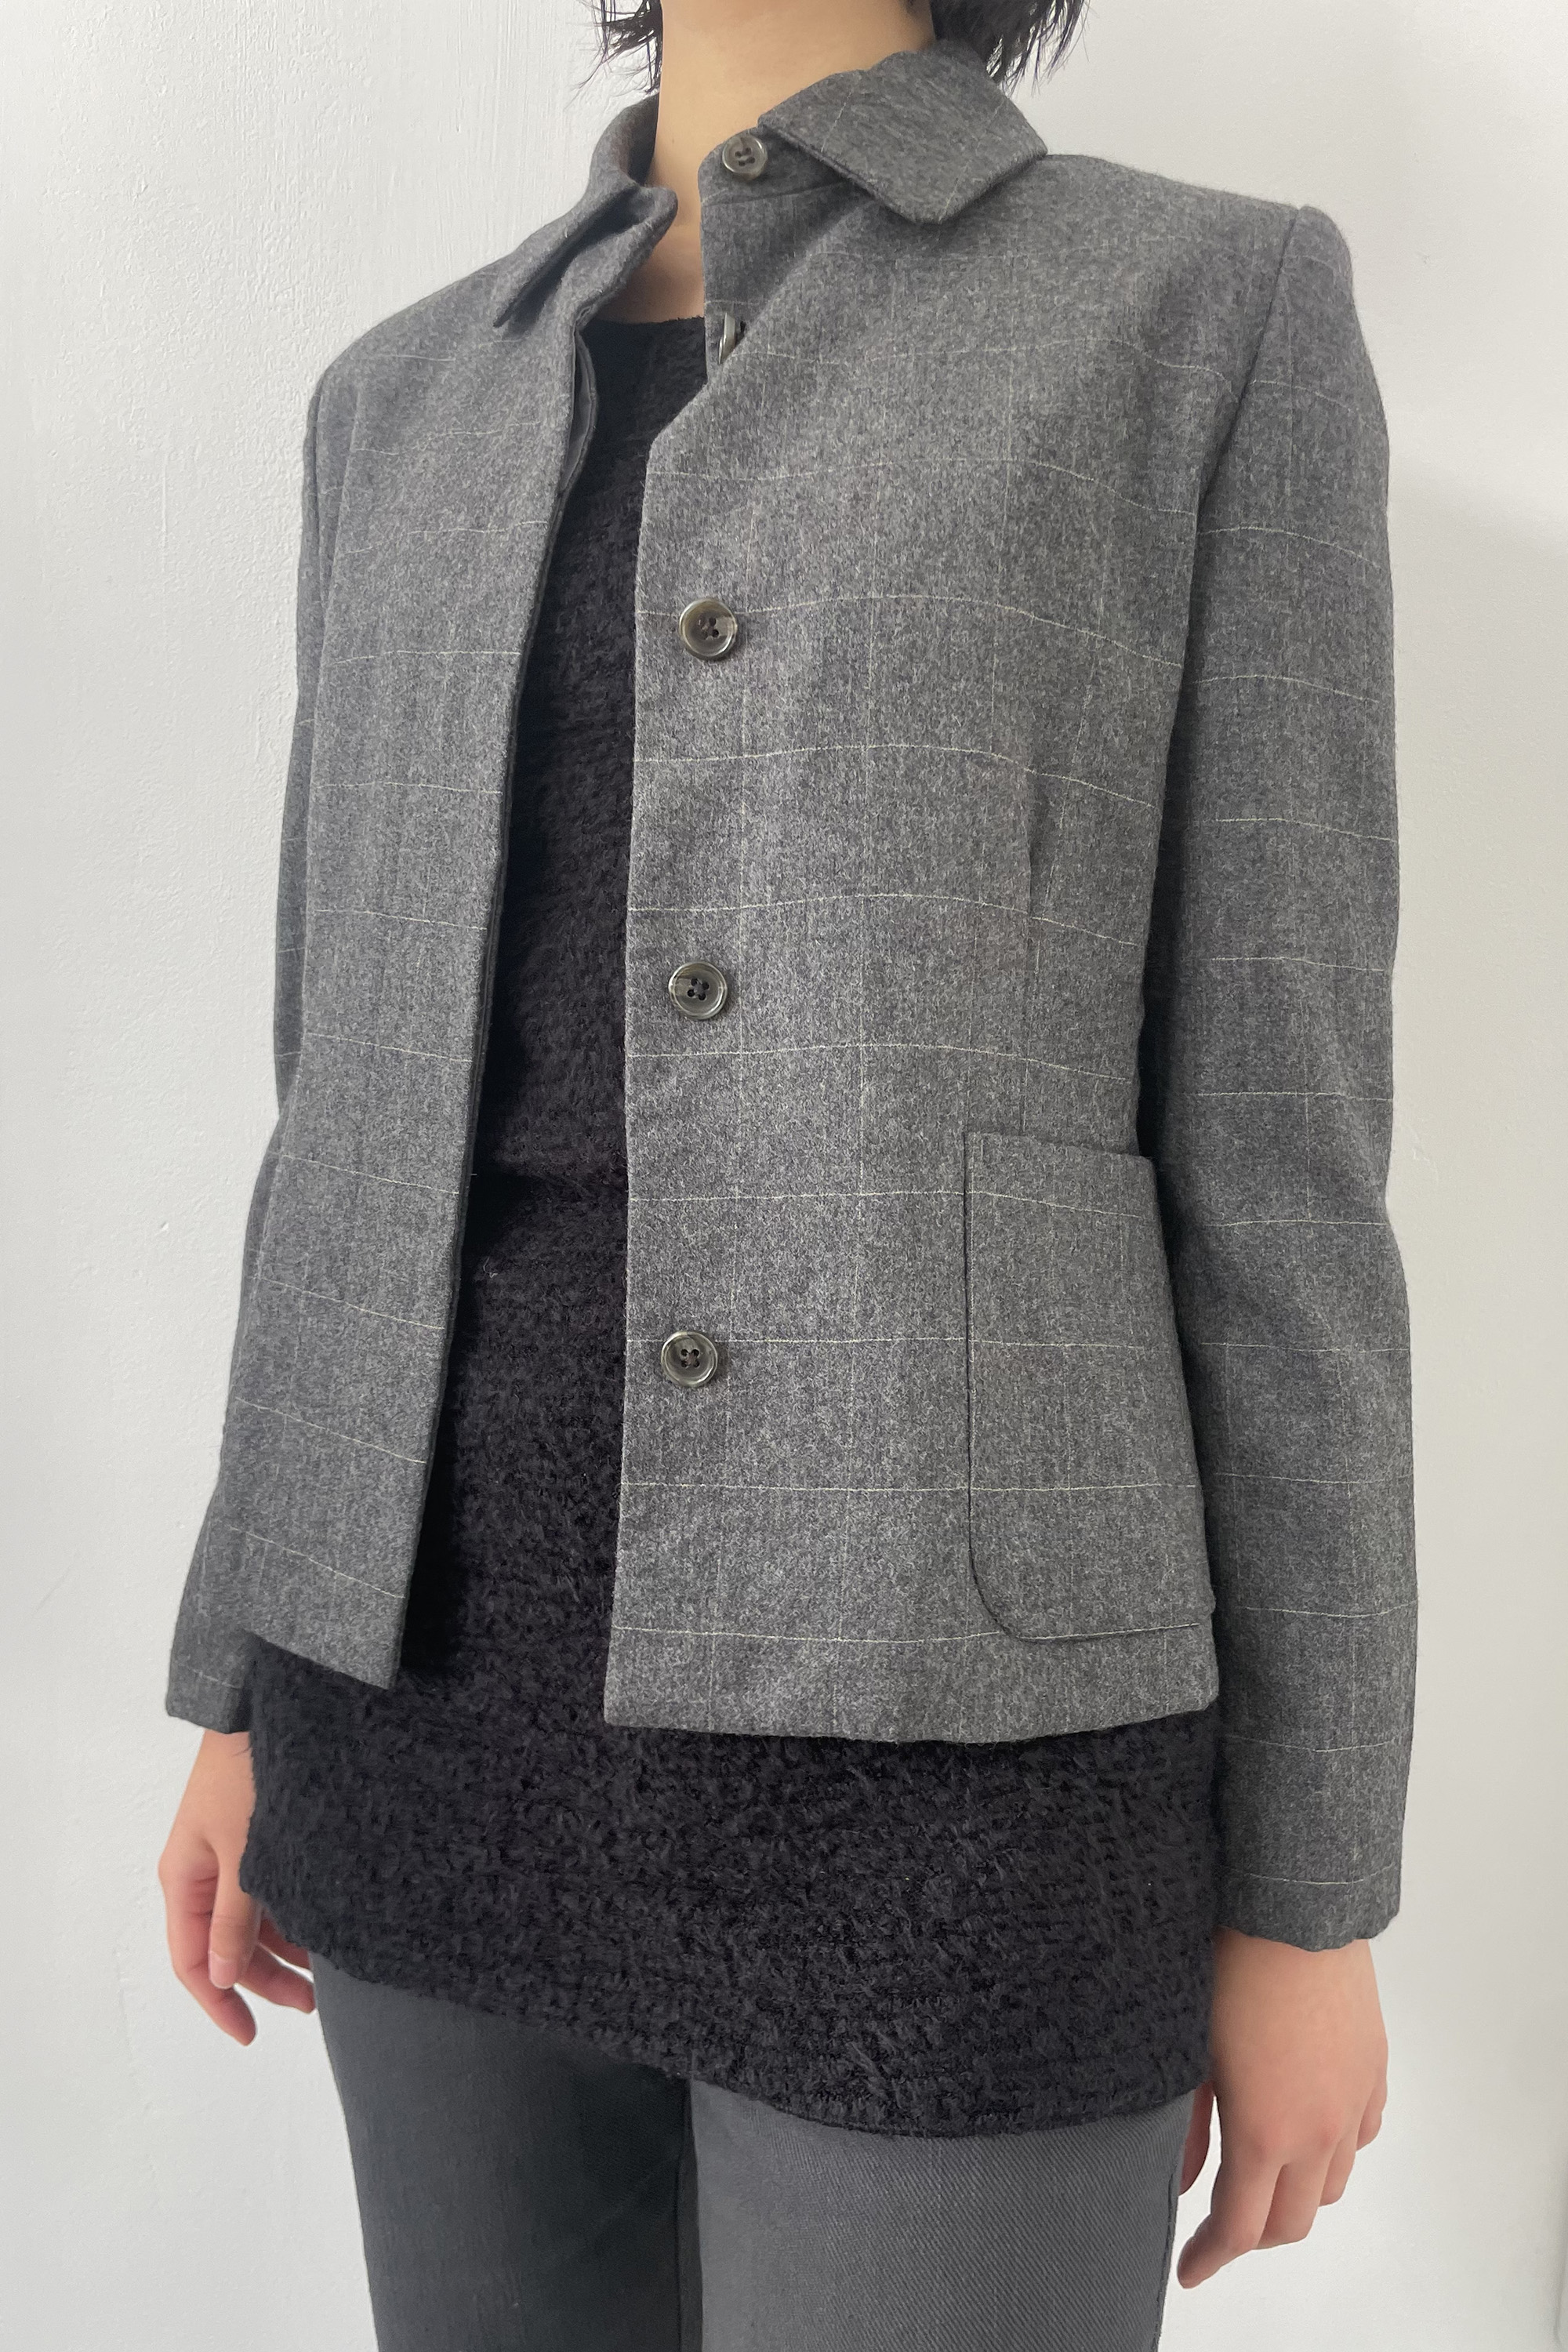 MARGARET HOWELL wool jacket